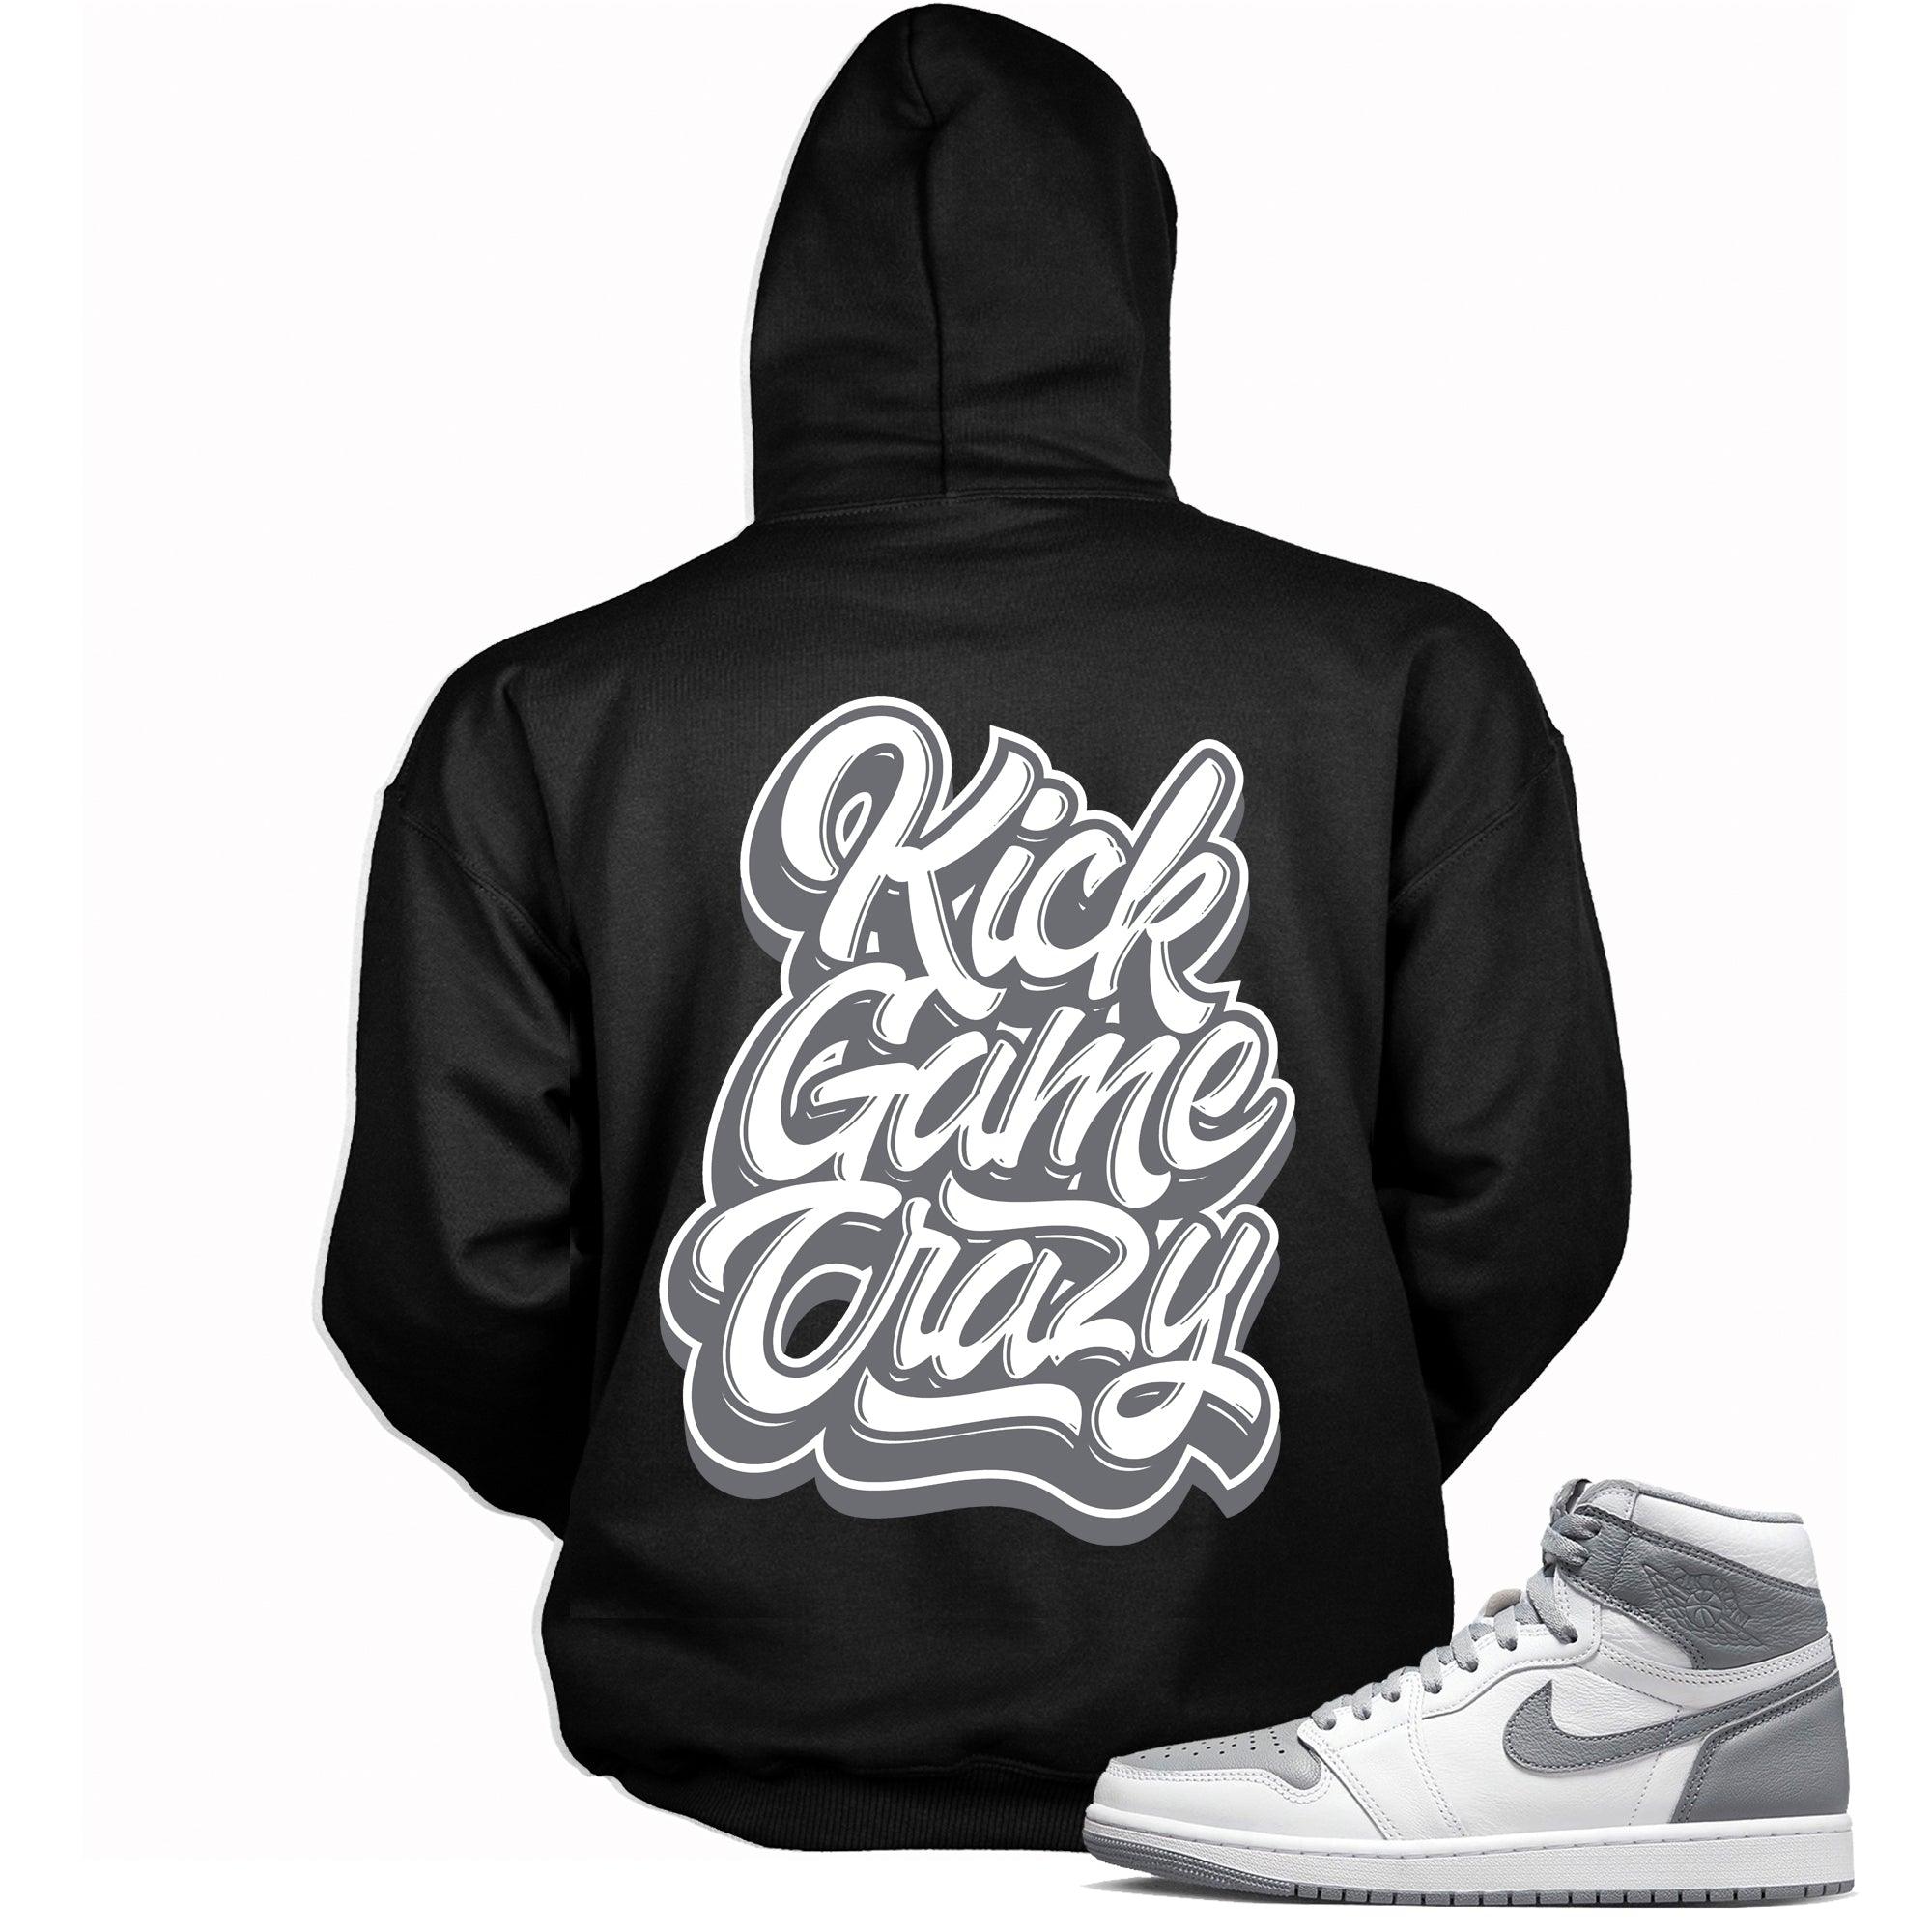 Kick Game Crazy Sneaker Hoodie for Jordan 1s photo